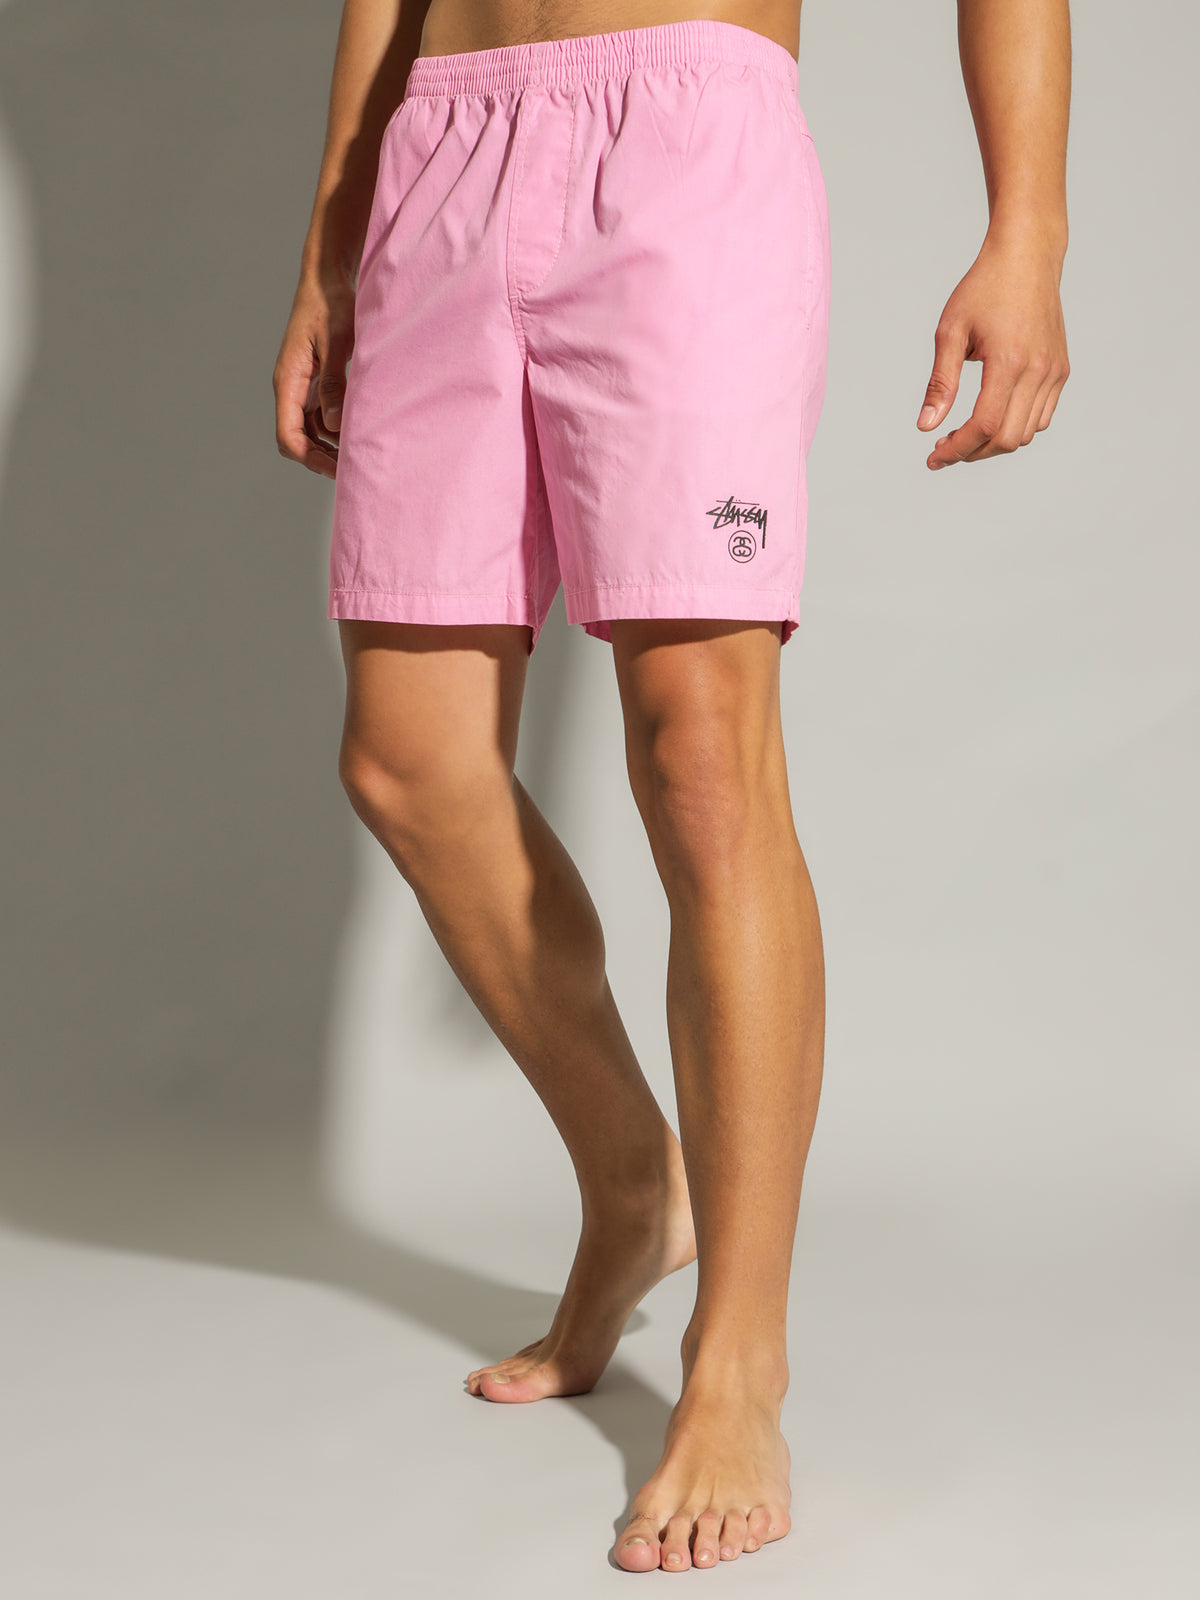 Basic Stock Beach Shorts in Lemonade